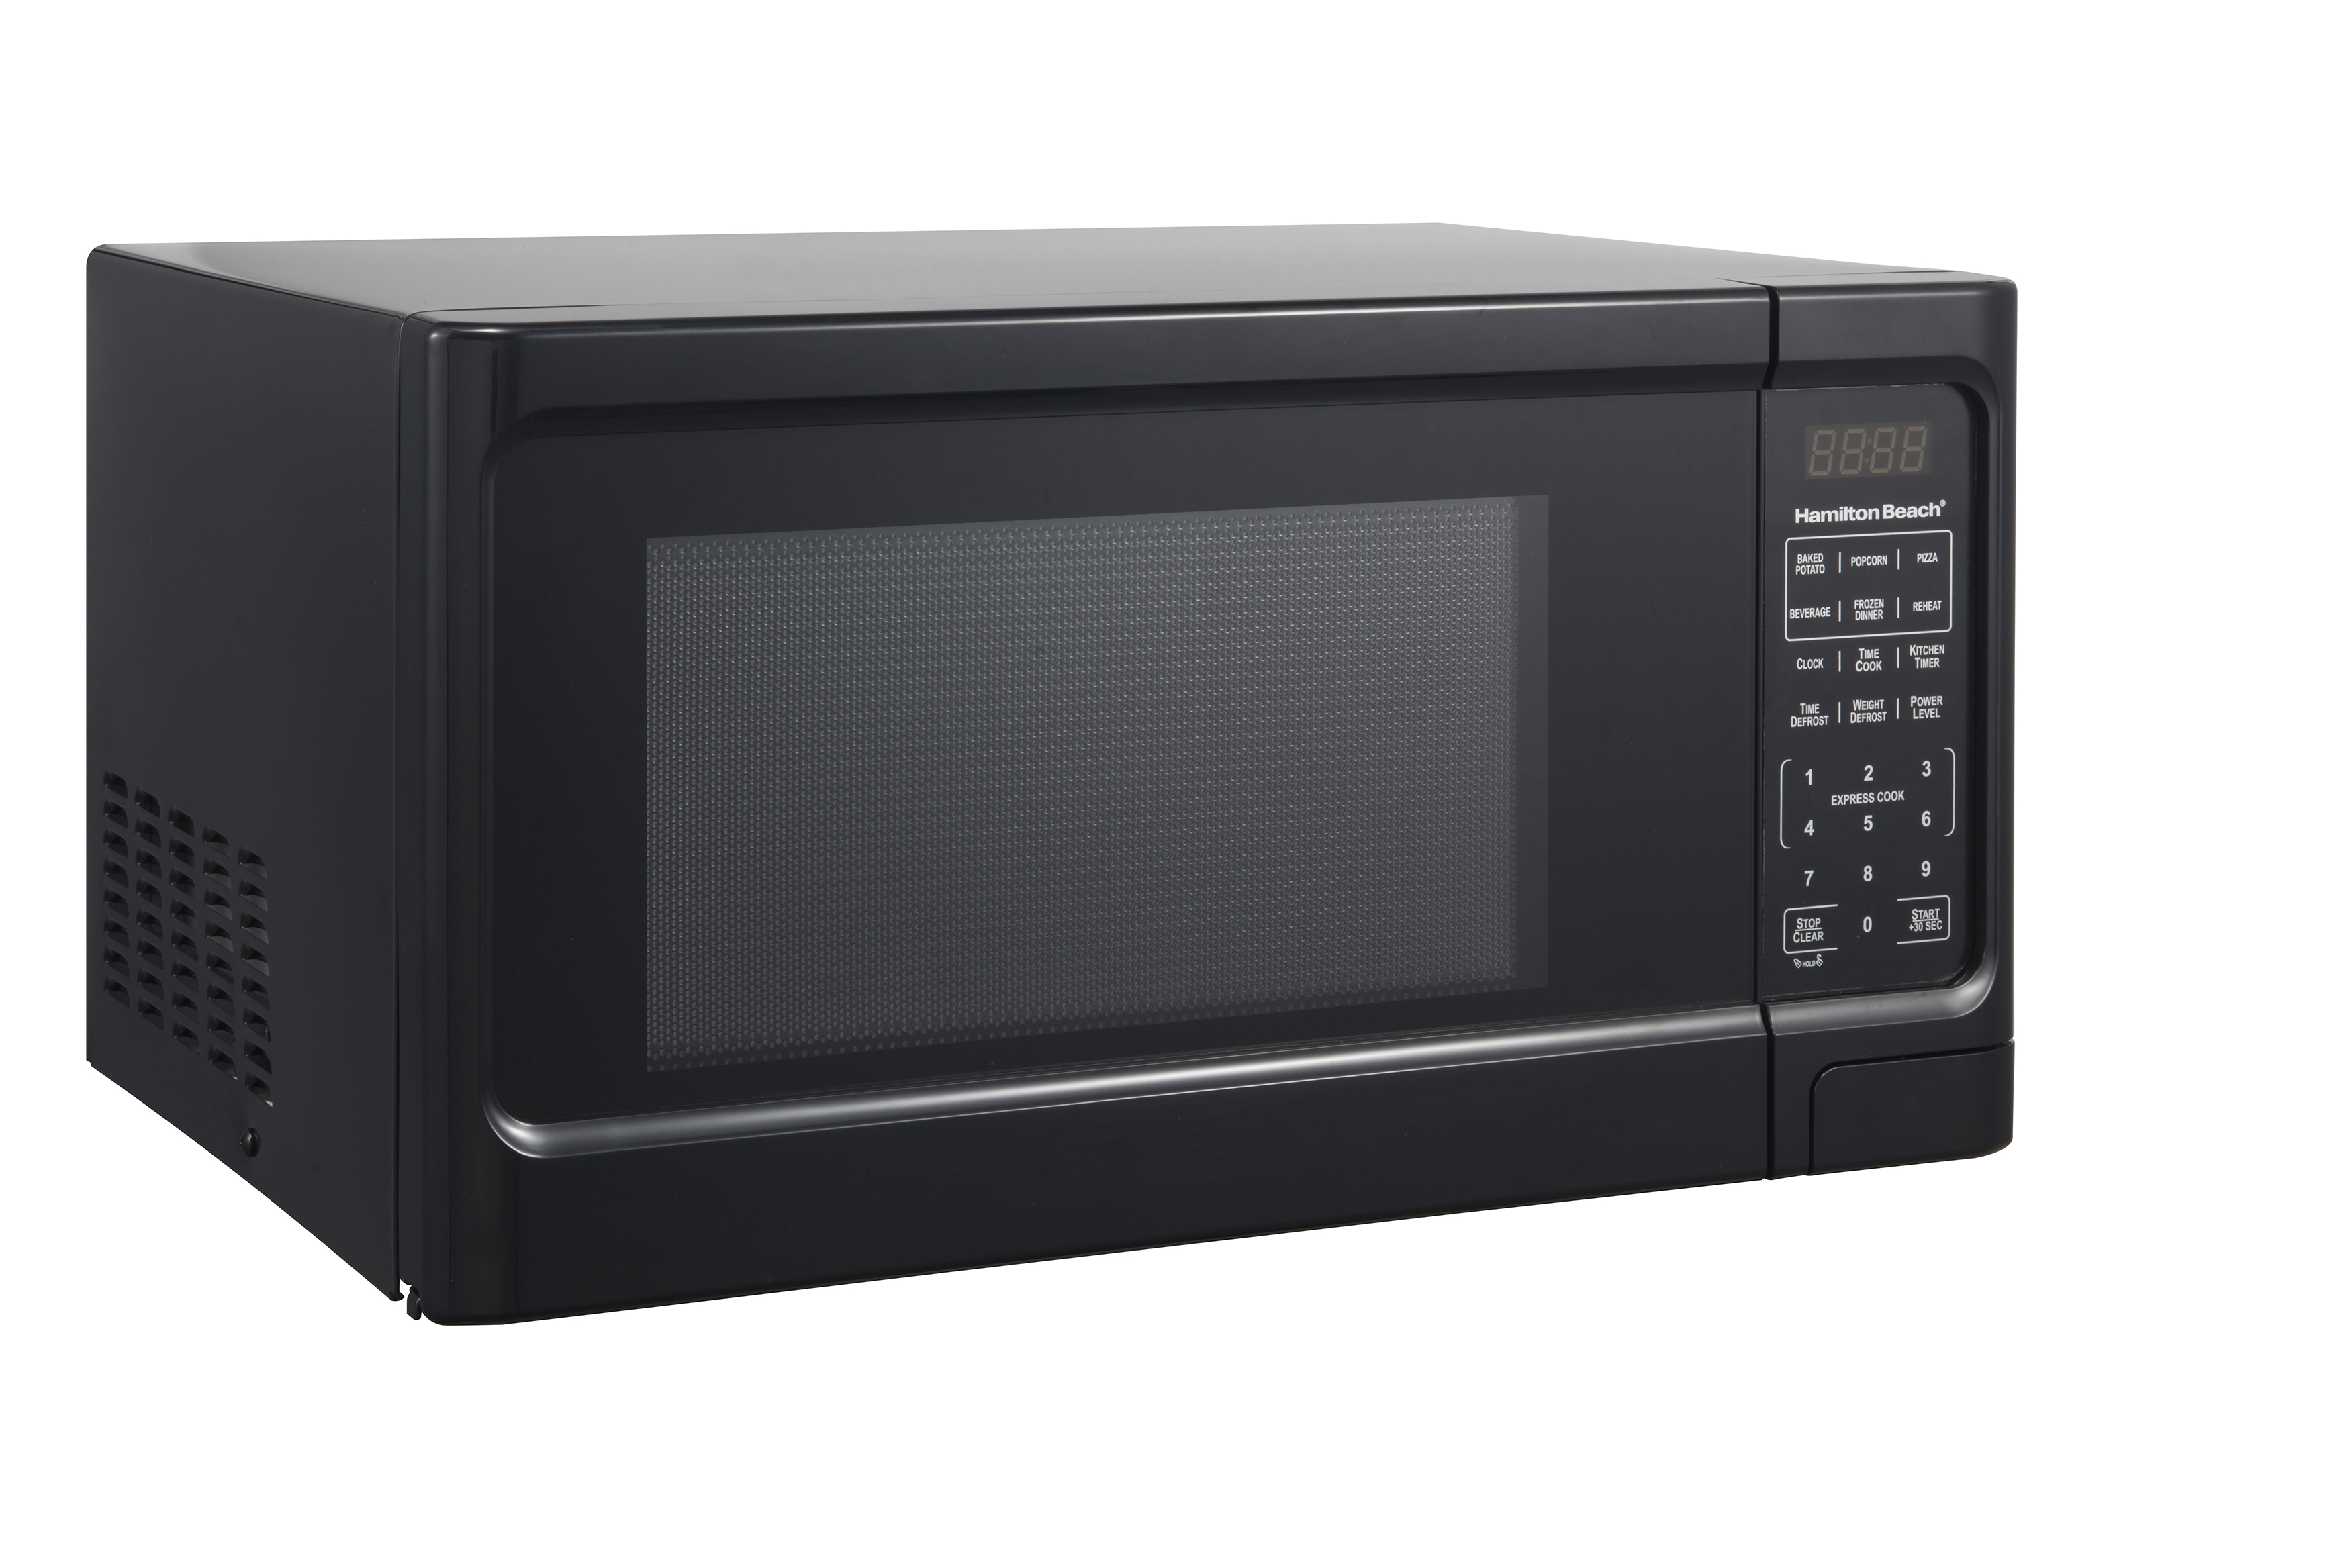 Hamilton Beach 1.1 cu. ft. Countertop Microwave Oven, 1000 Watts, Black - image 5 of 9